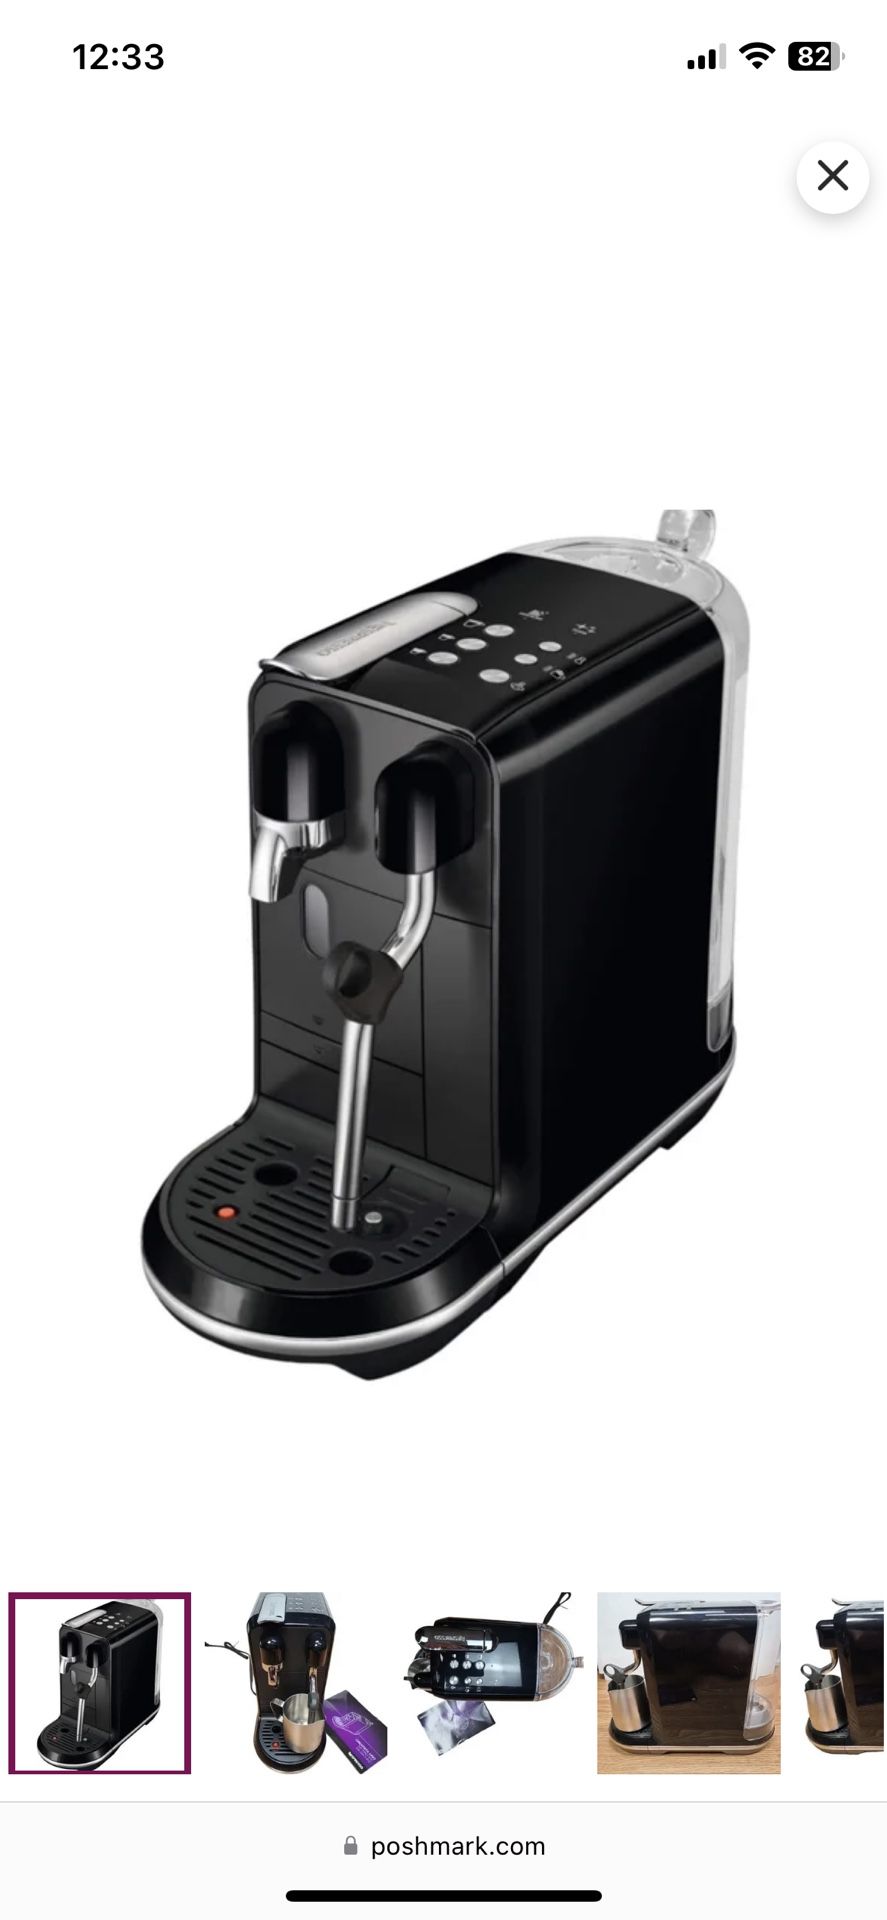 Breville Creatista Nespresso Machine 